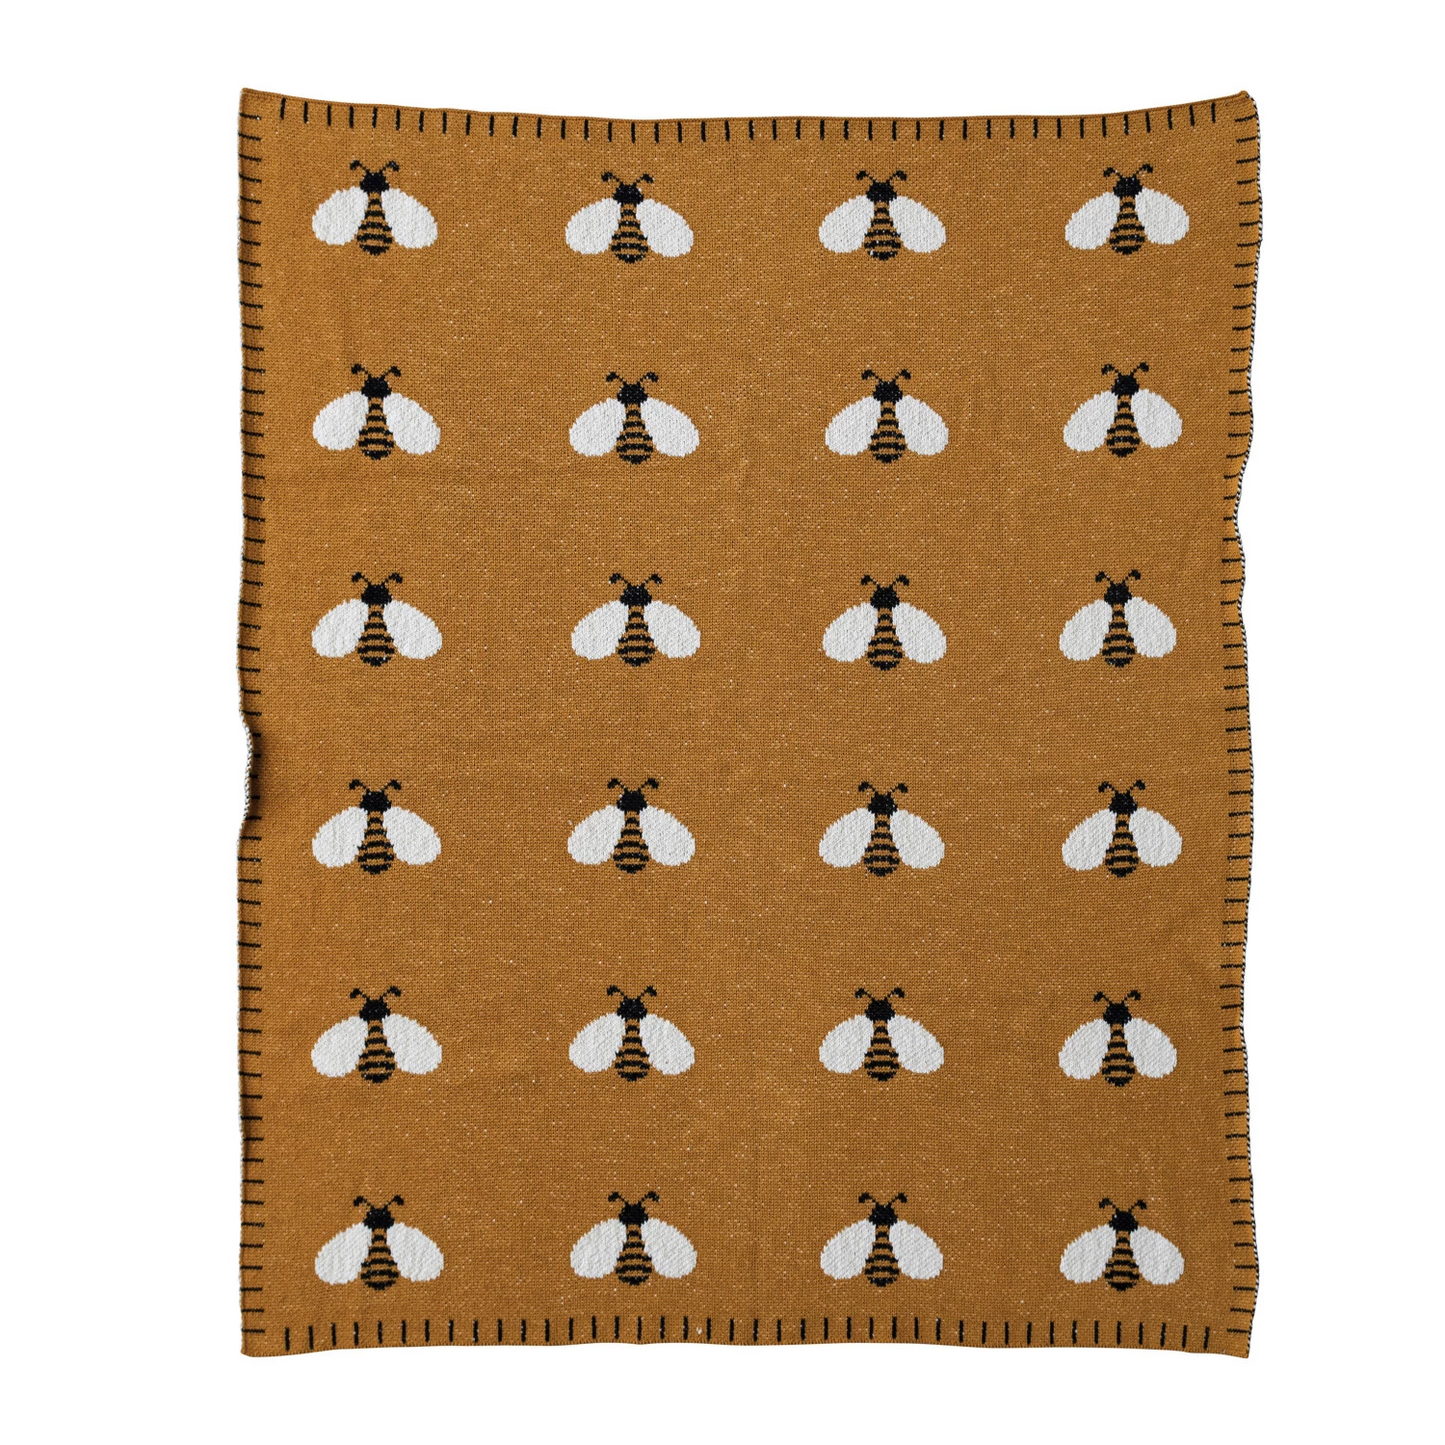 Bee Cotton Knit Blanket - Mustard